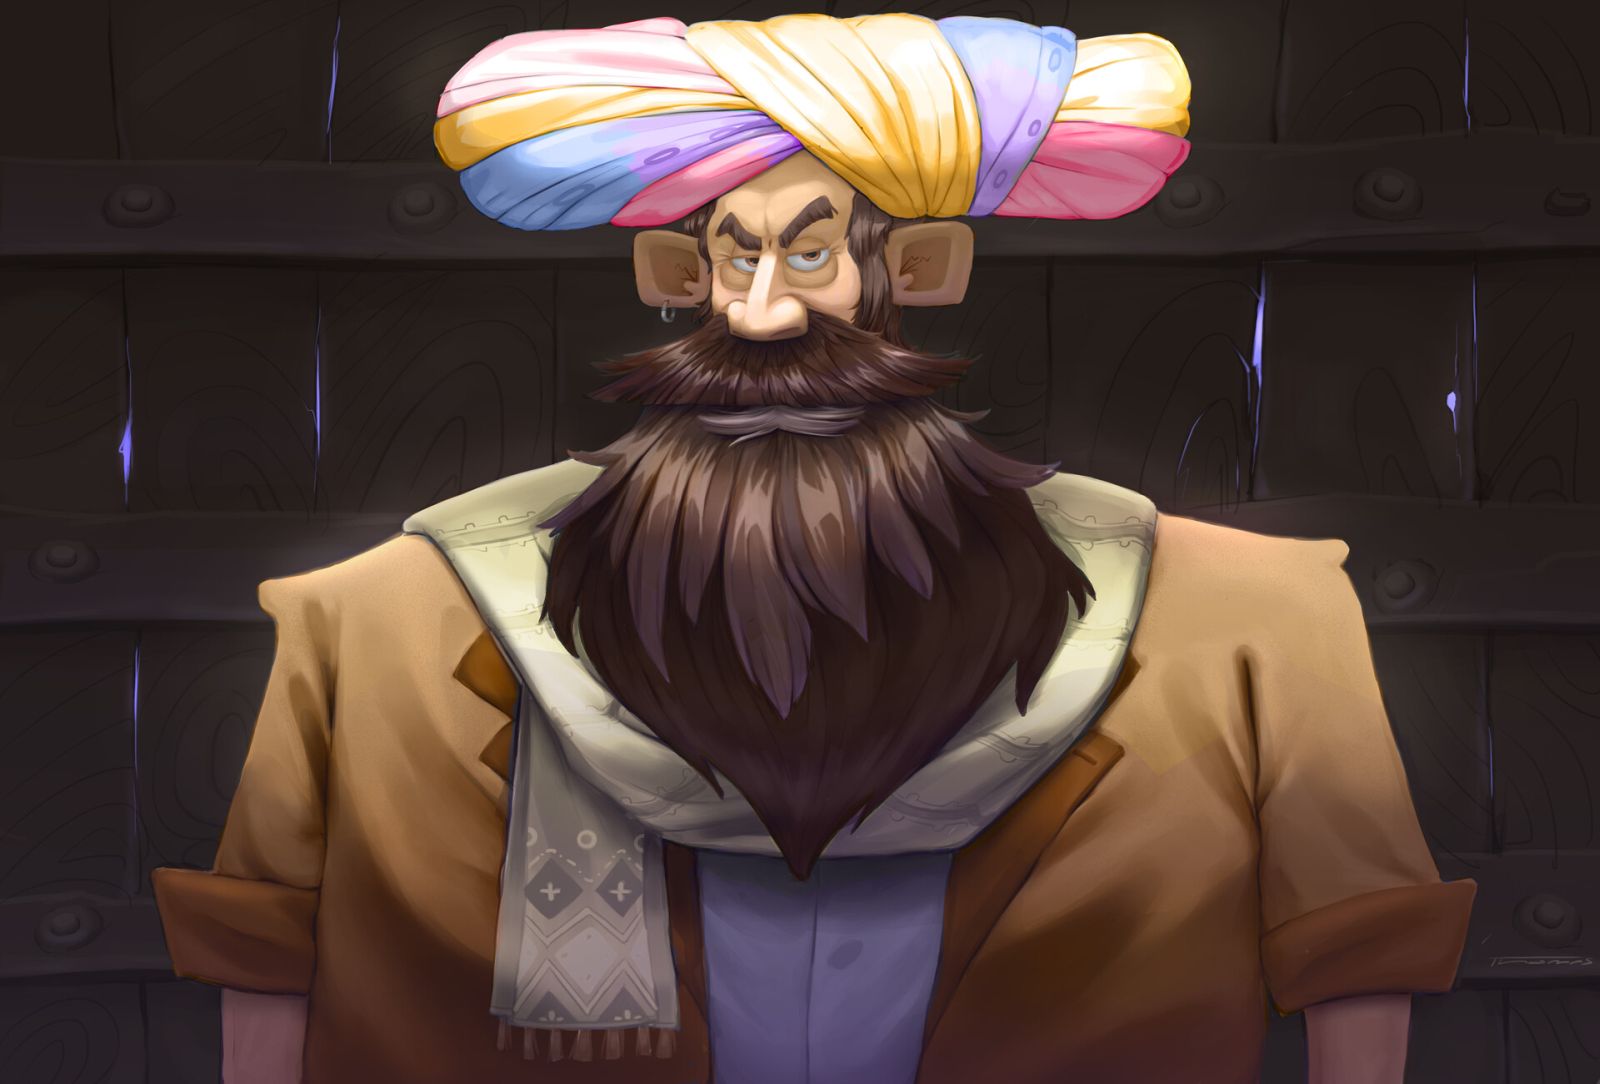 rajasthani digital illustration turban man